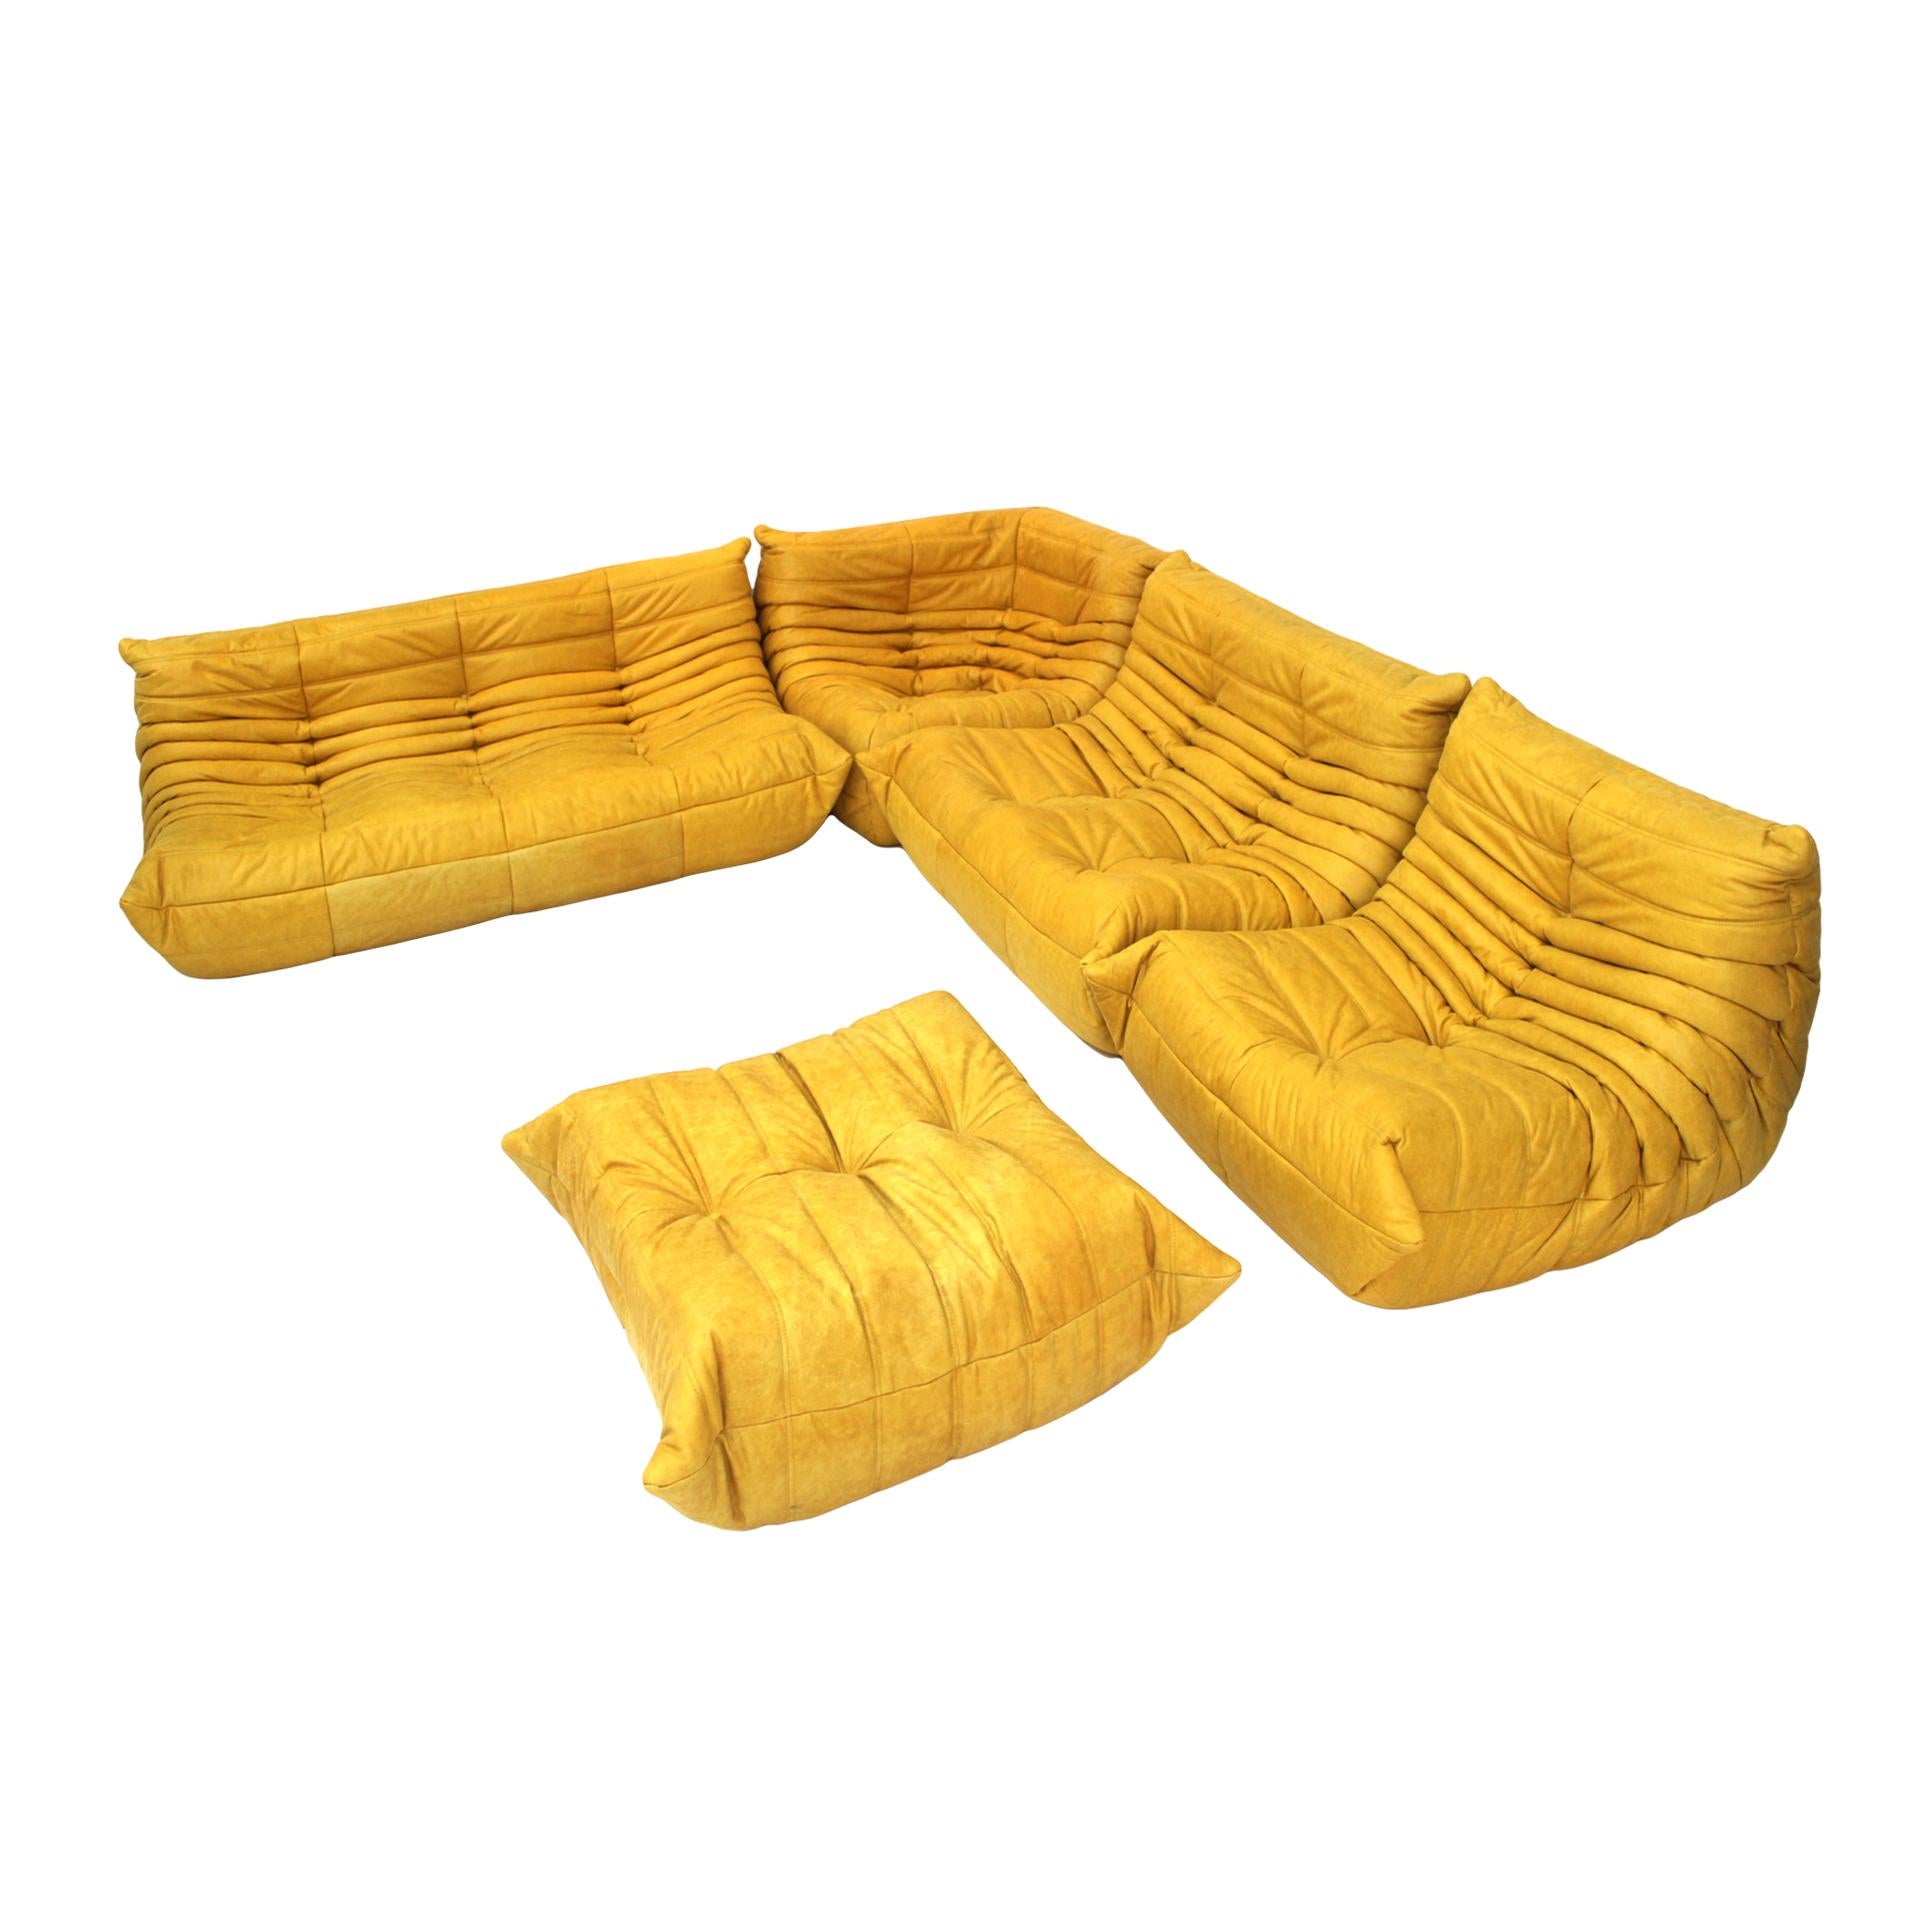 Set mod. Togo designed by Michel Ducaroy for Ligne Roset. Reupholstered in brown leather. France 70's.

Dimensions: W265 x D 190 x H 35 / 70 cm

Double armchair size: W 120 x D 100 x H 35 / 70 cm
Corner sofa: W 100 x D 100 x H 35 / 70 cm (1 item) D